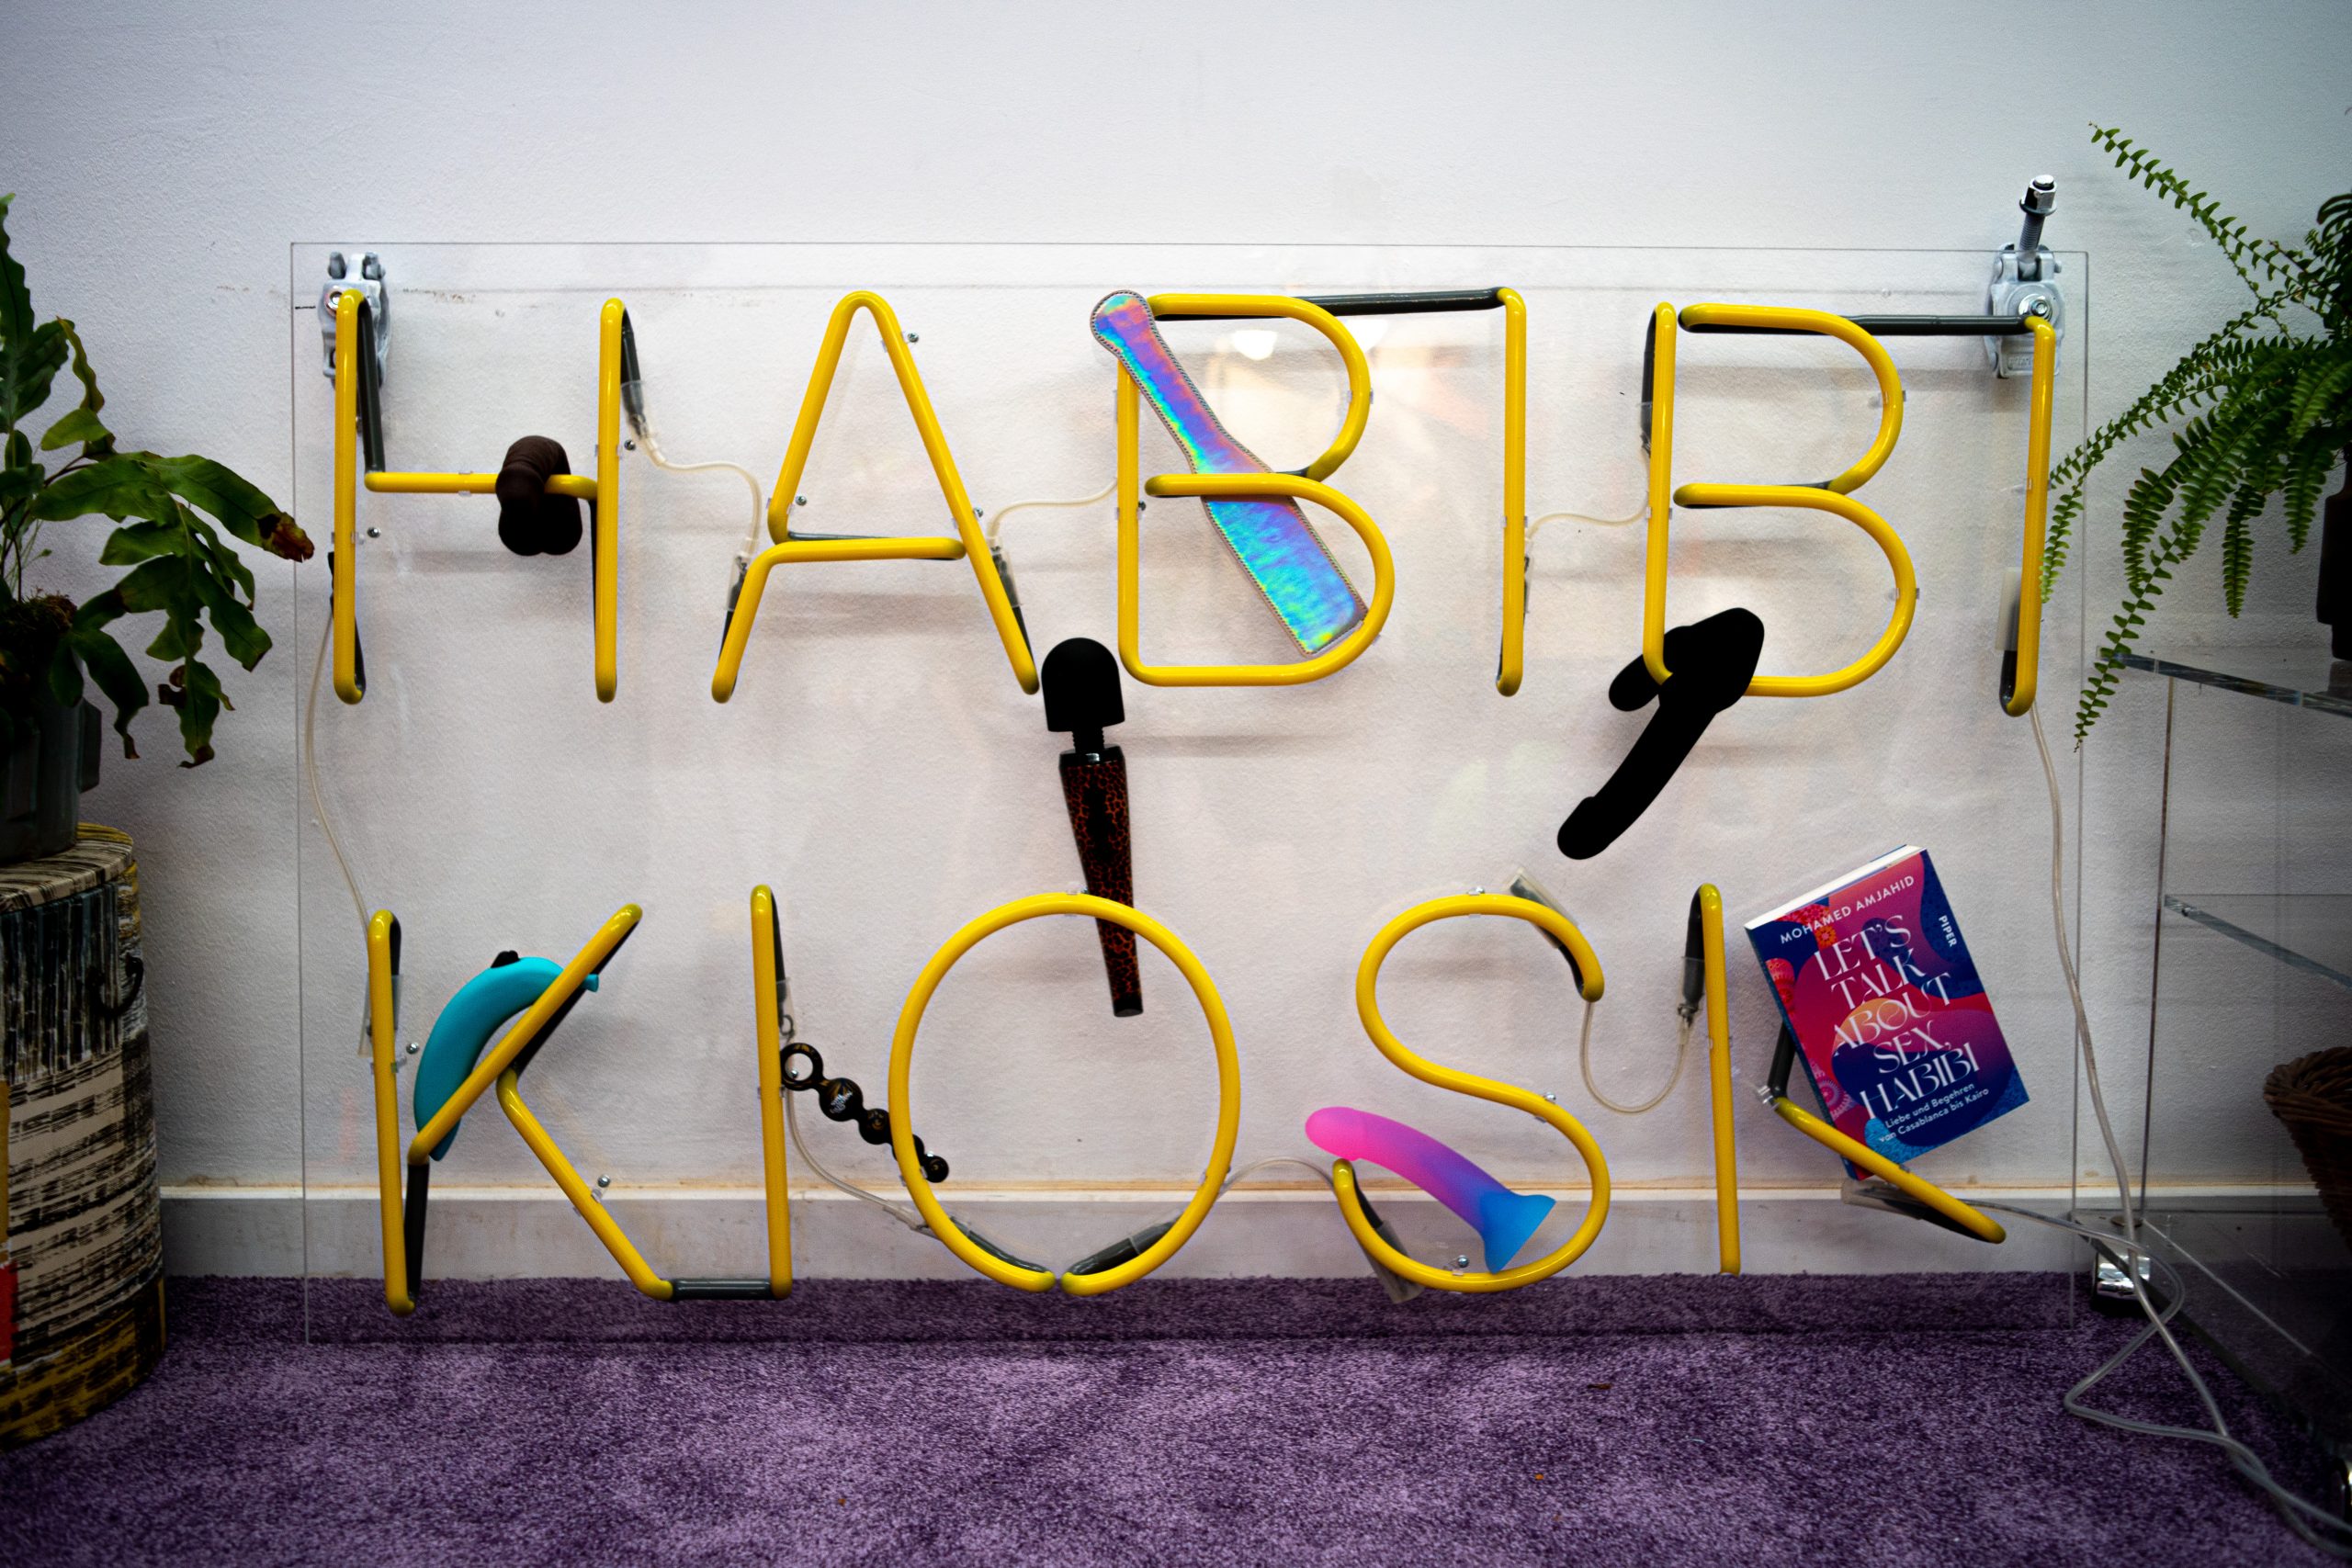 Schriftzug "Habibi Kiosk" mit Toys